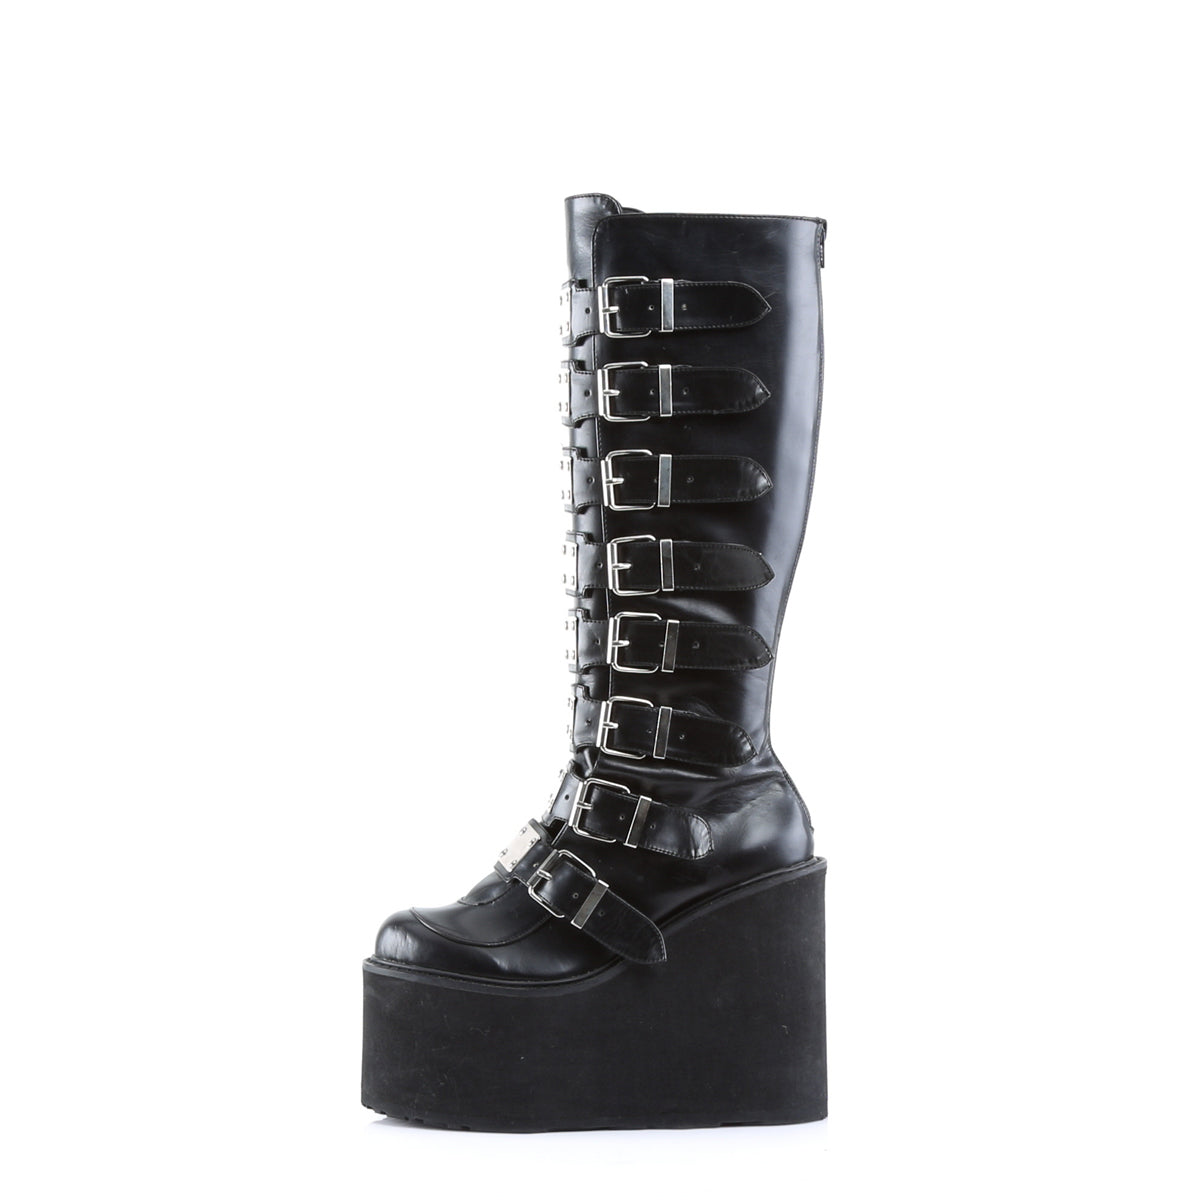 SWING-815 Demonia Black Vegan Leather Women's Mid-Calf & Knee High Boots [Demonia Cult Alternative Footwear]